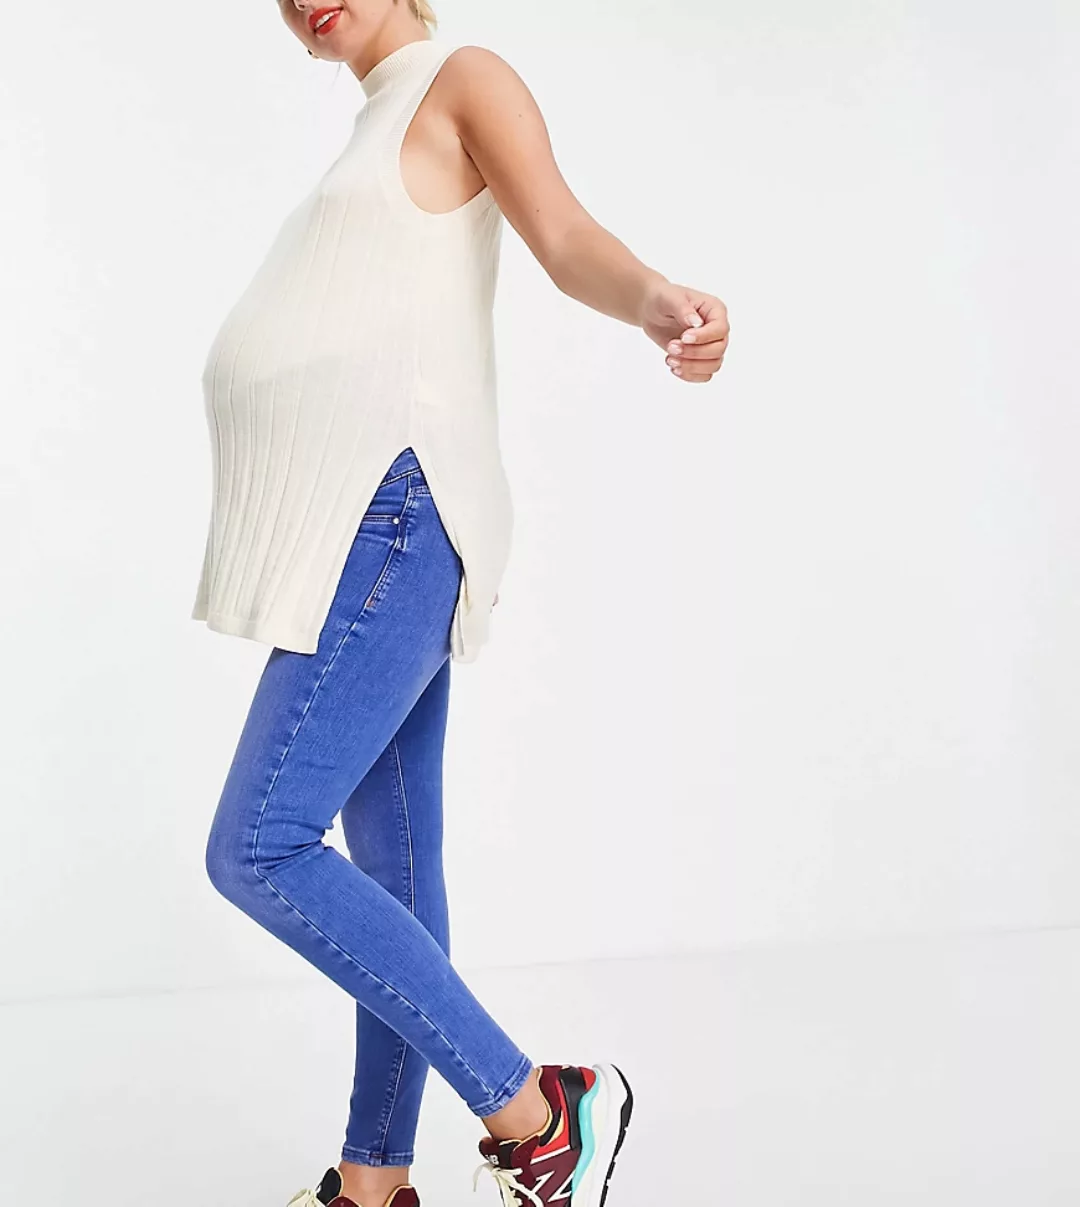 River Island Maternity – Molly – Skinny-Jeans in Buzzy-Blau mit Überbauchbu günstig online kaufen